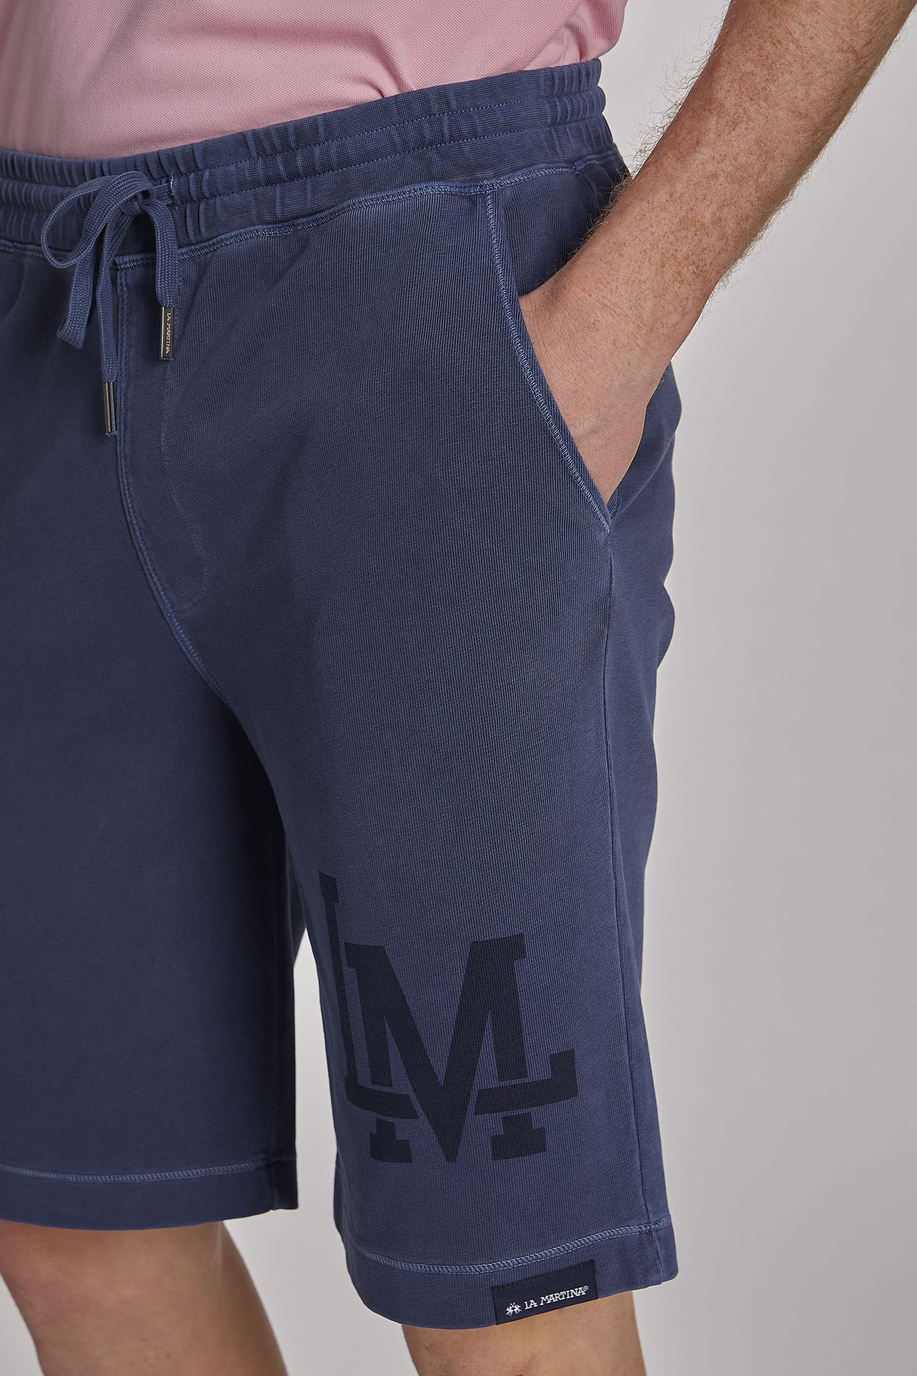 Men's comfort-fit cotton Bermuda shorts